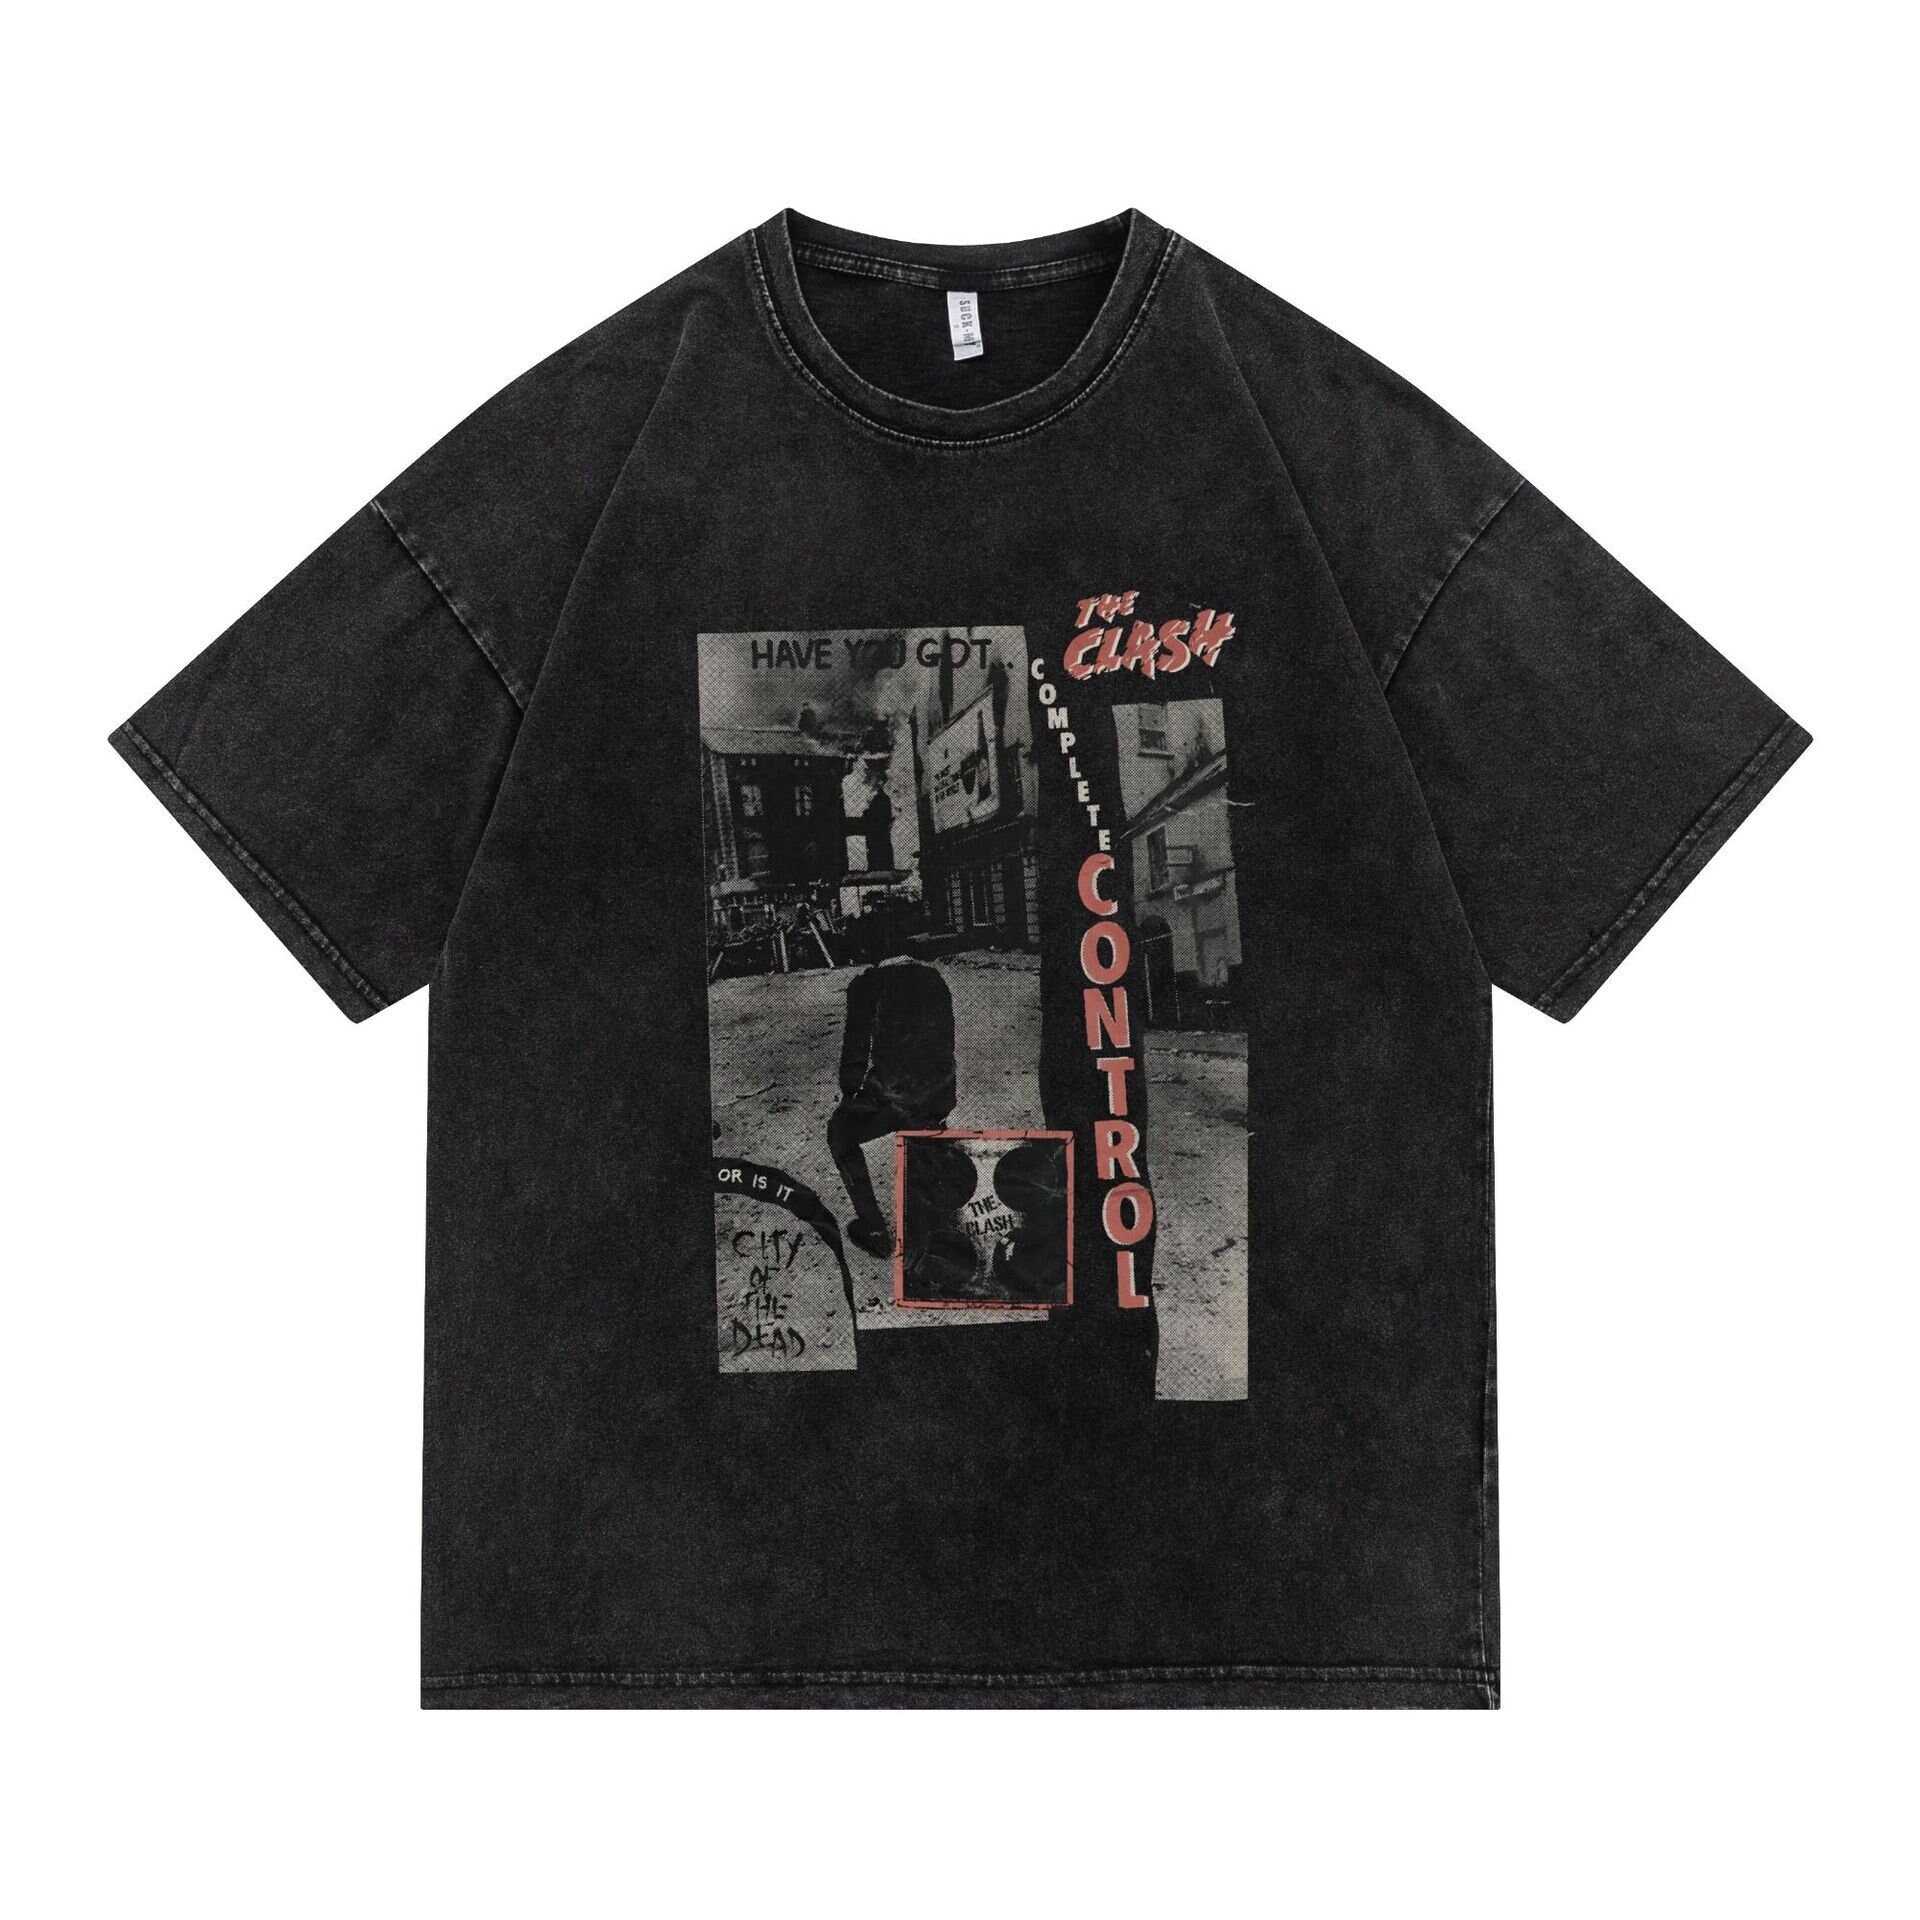 Discover The Clash Shirt, The Clash, Joe Strummer, Punk Shirt, Punk Rock Shirt